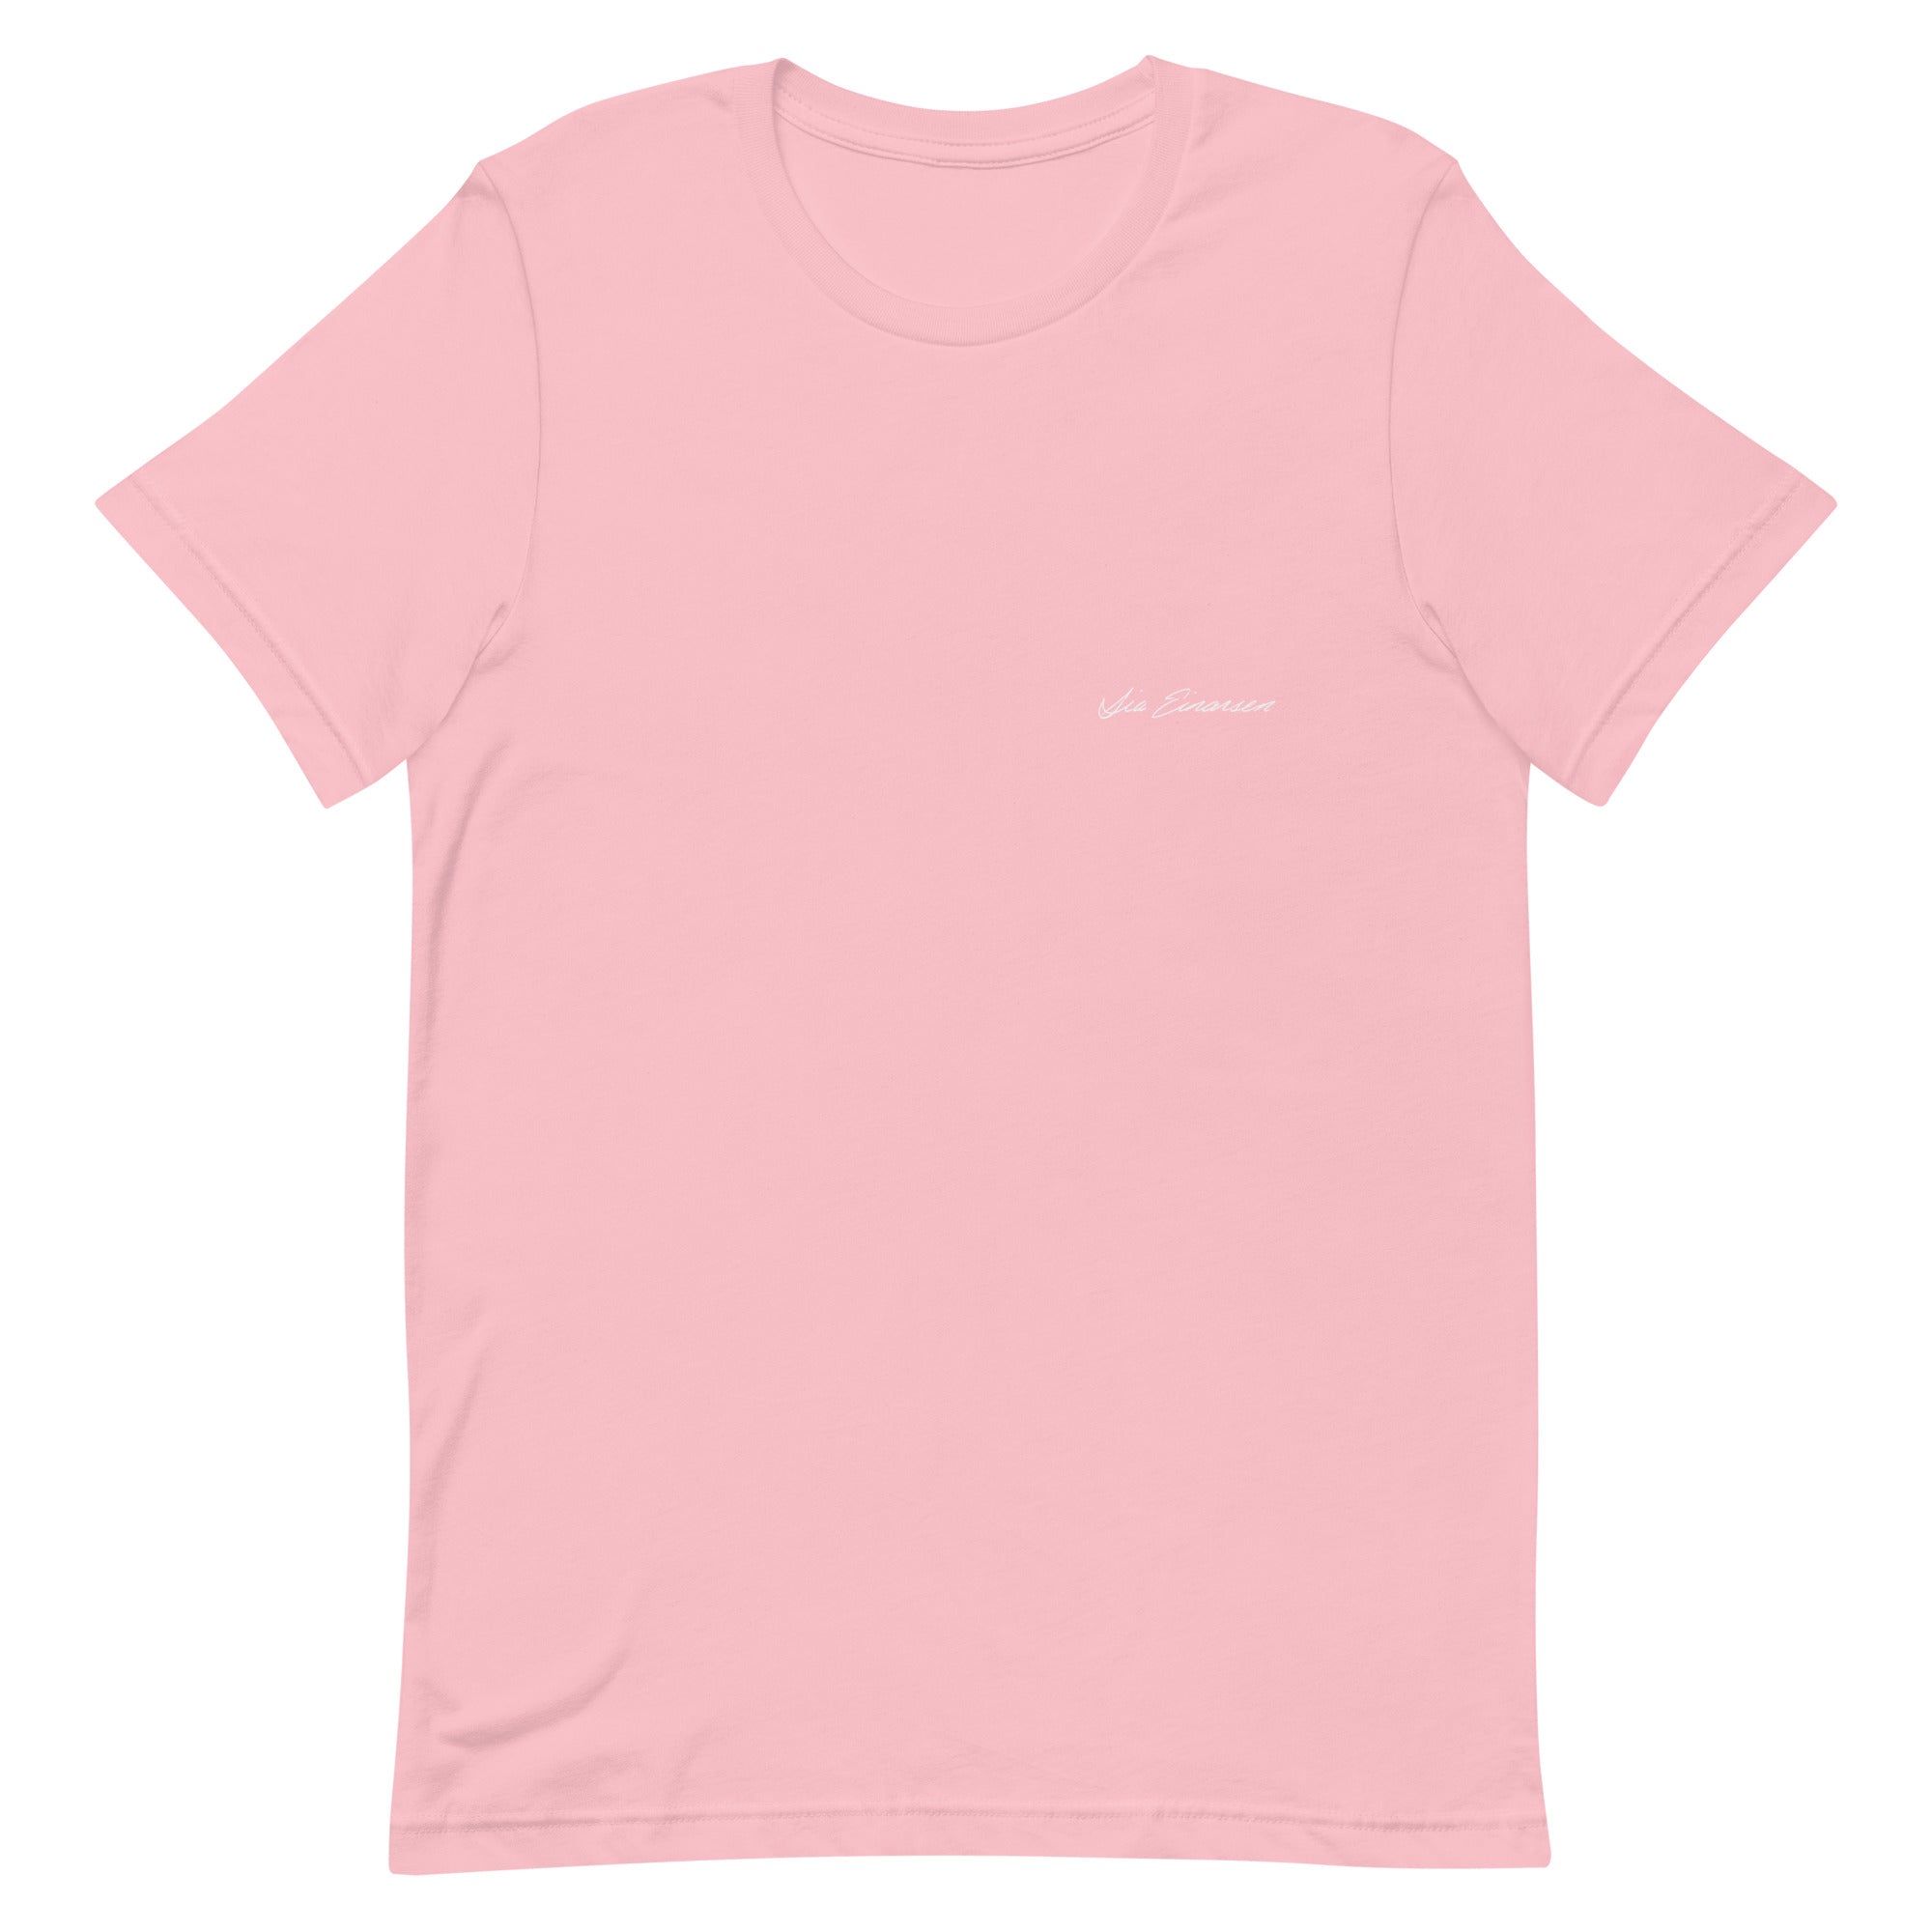 Tia Einarsen - Unisex t-shirt